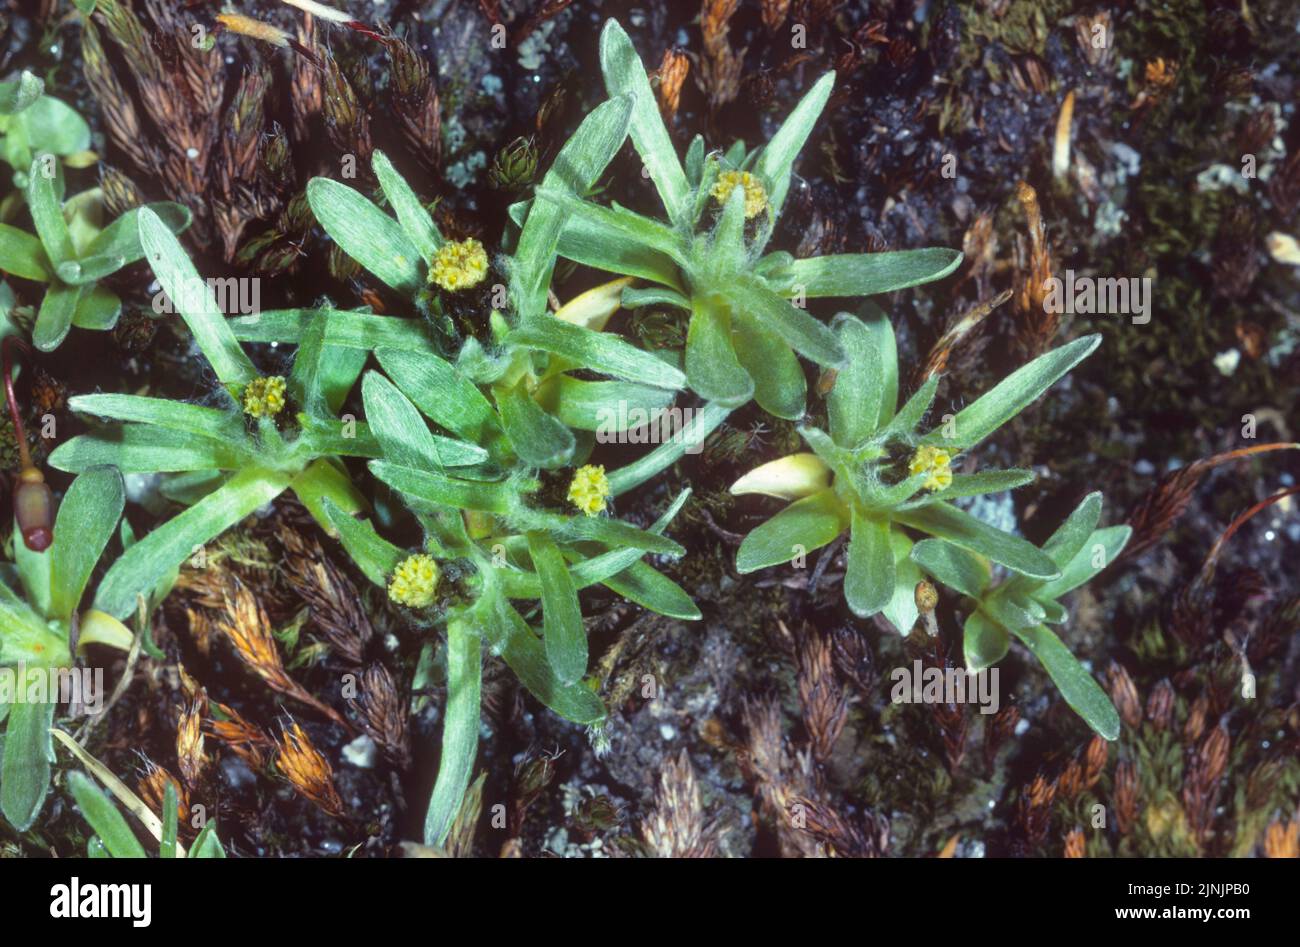 mountain cudweed, dwarf cudweed (Gnaphalium supinum, Omalotheca supinum), blooming, Germany Stock Photo